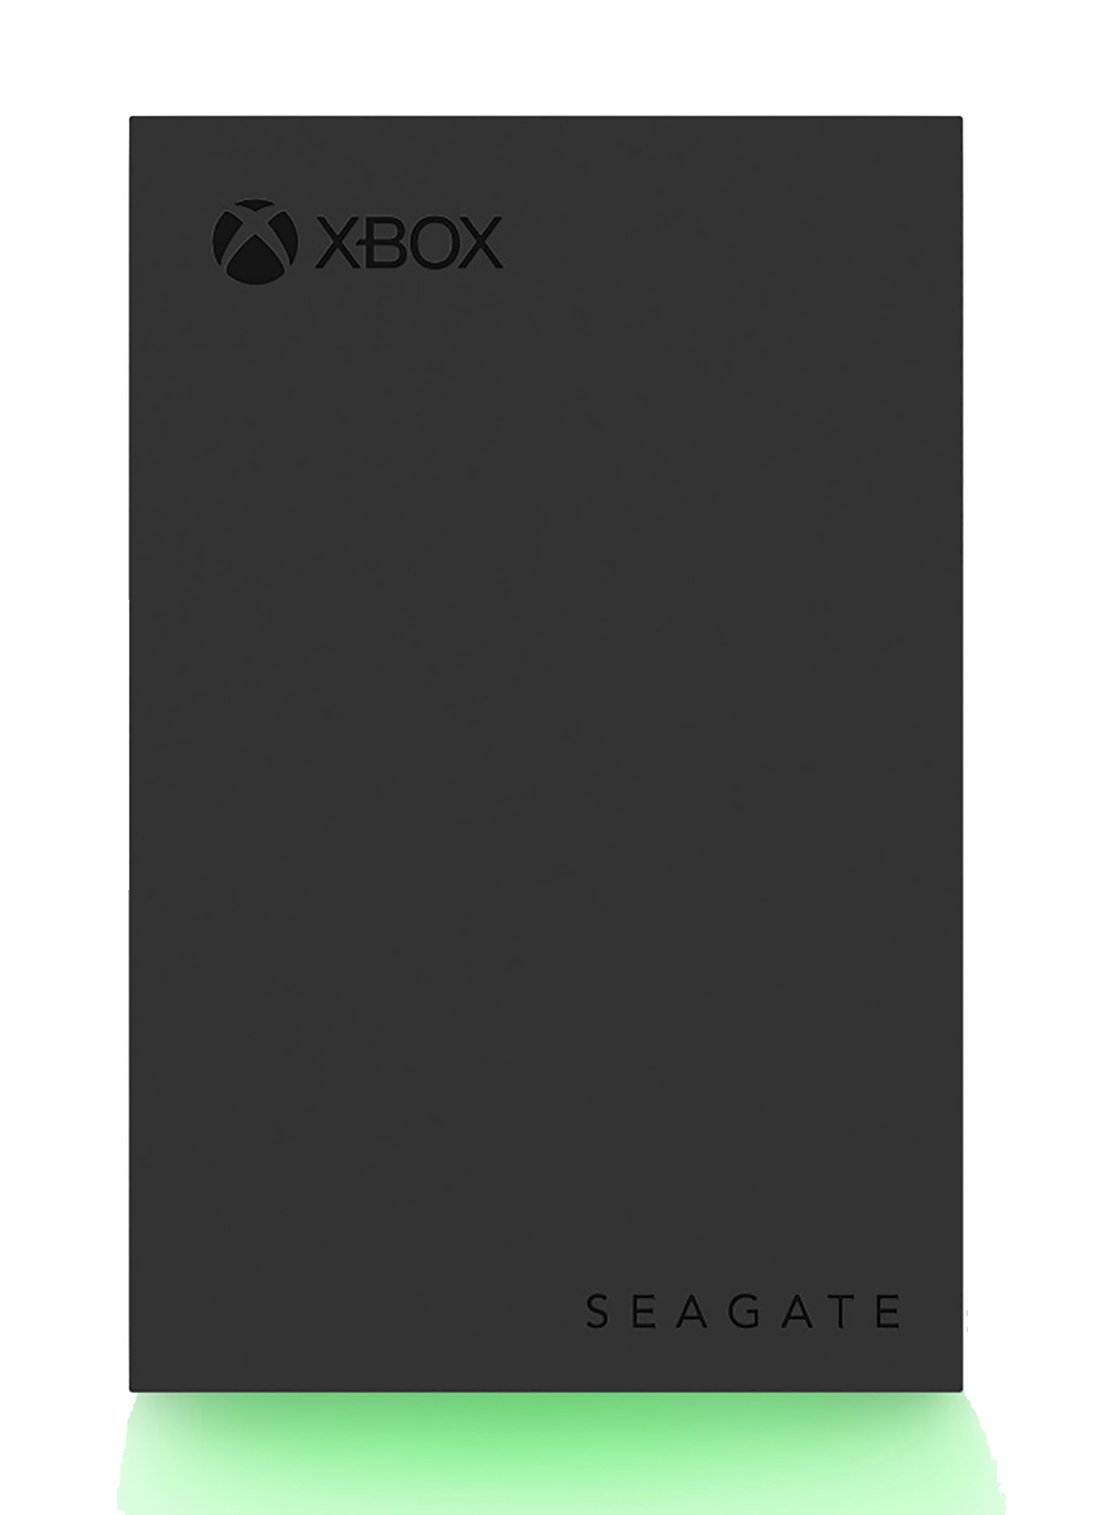 Seagate Xbox 2TB Portable Gaming Hard Drive